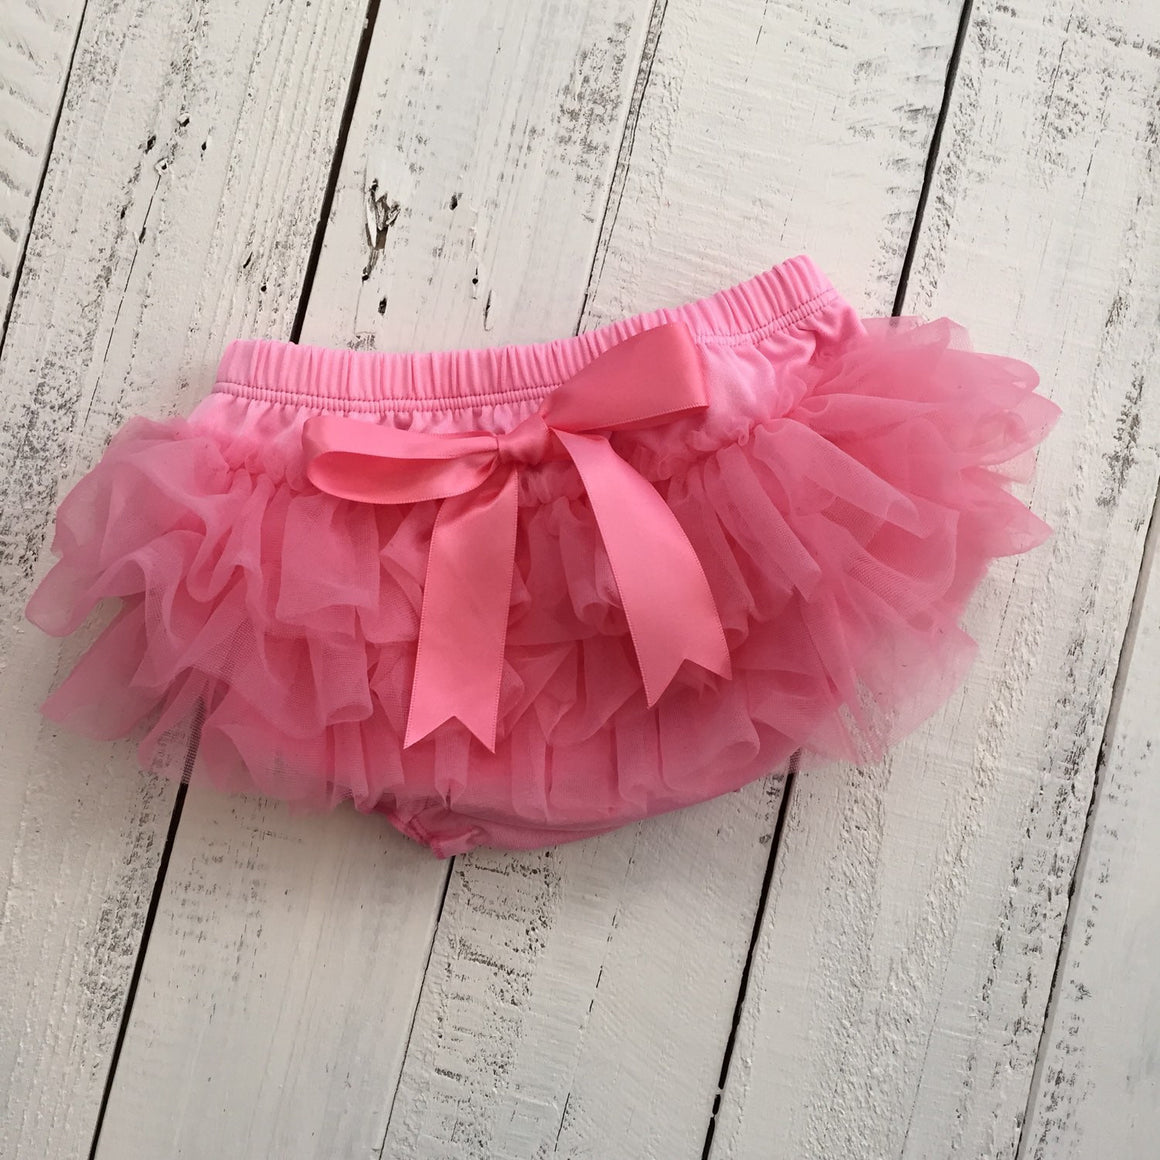 Coral Pink - Pettiskirt - Tutu Skirt Bloomer - Ruffle Bottom Bloomer - HoneyLoveBoutique